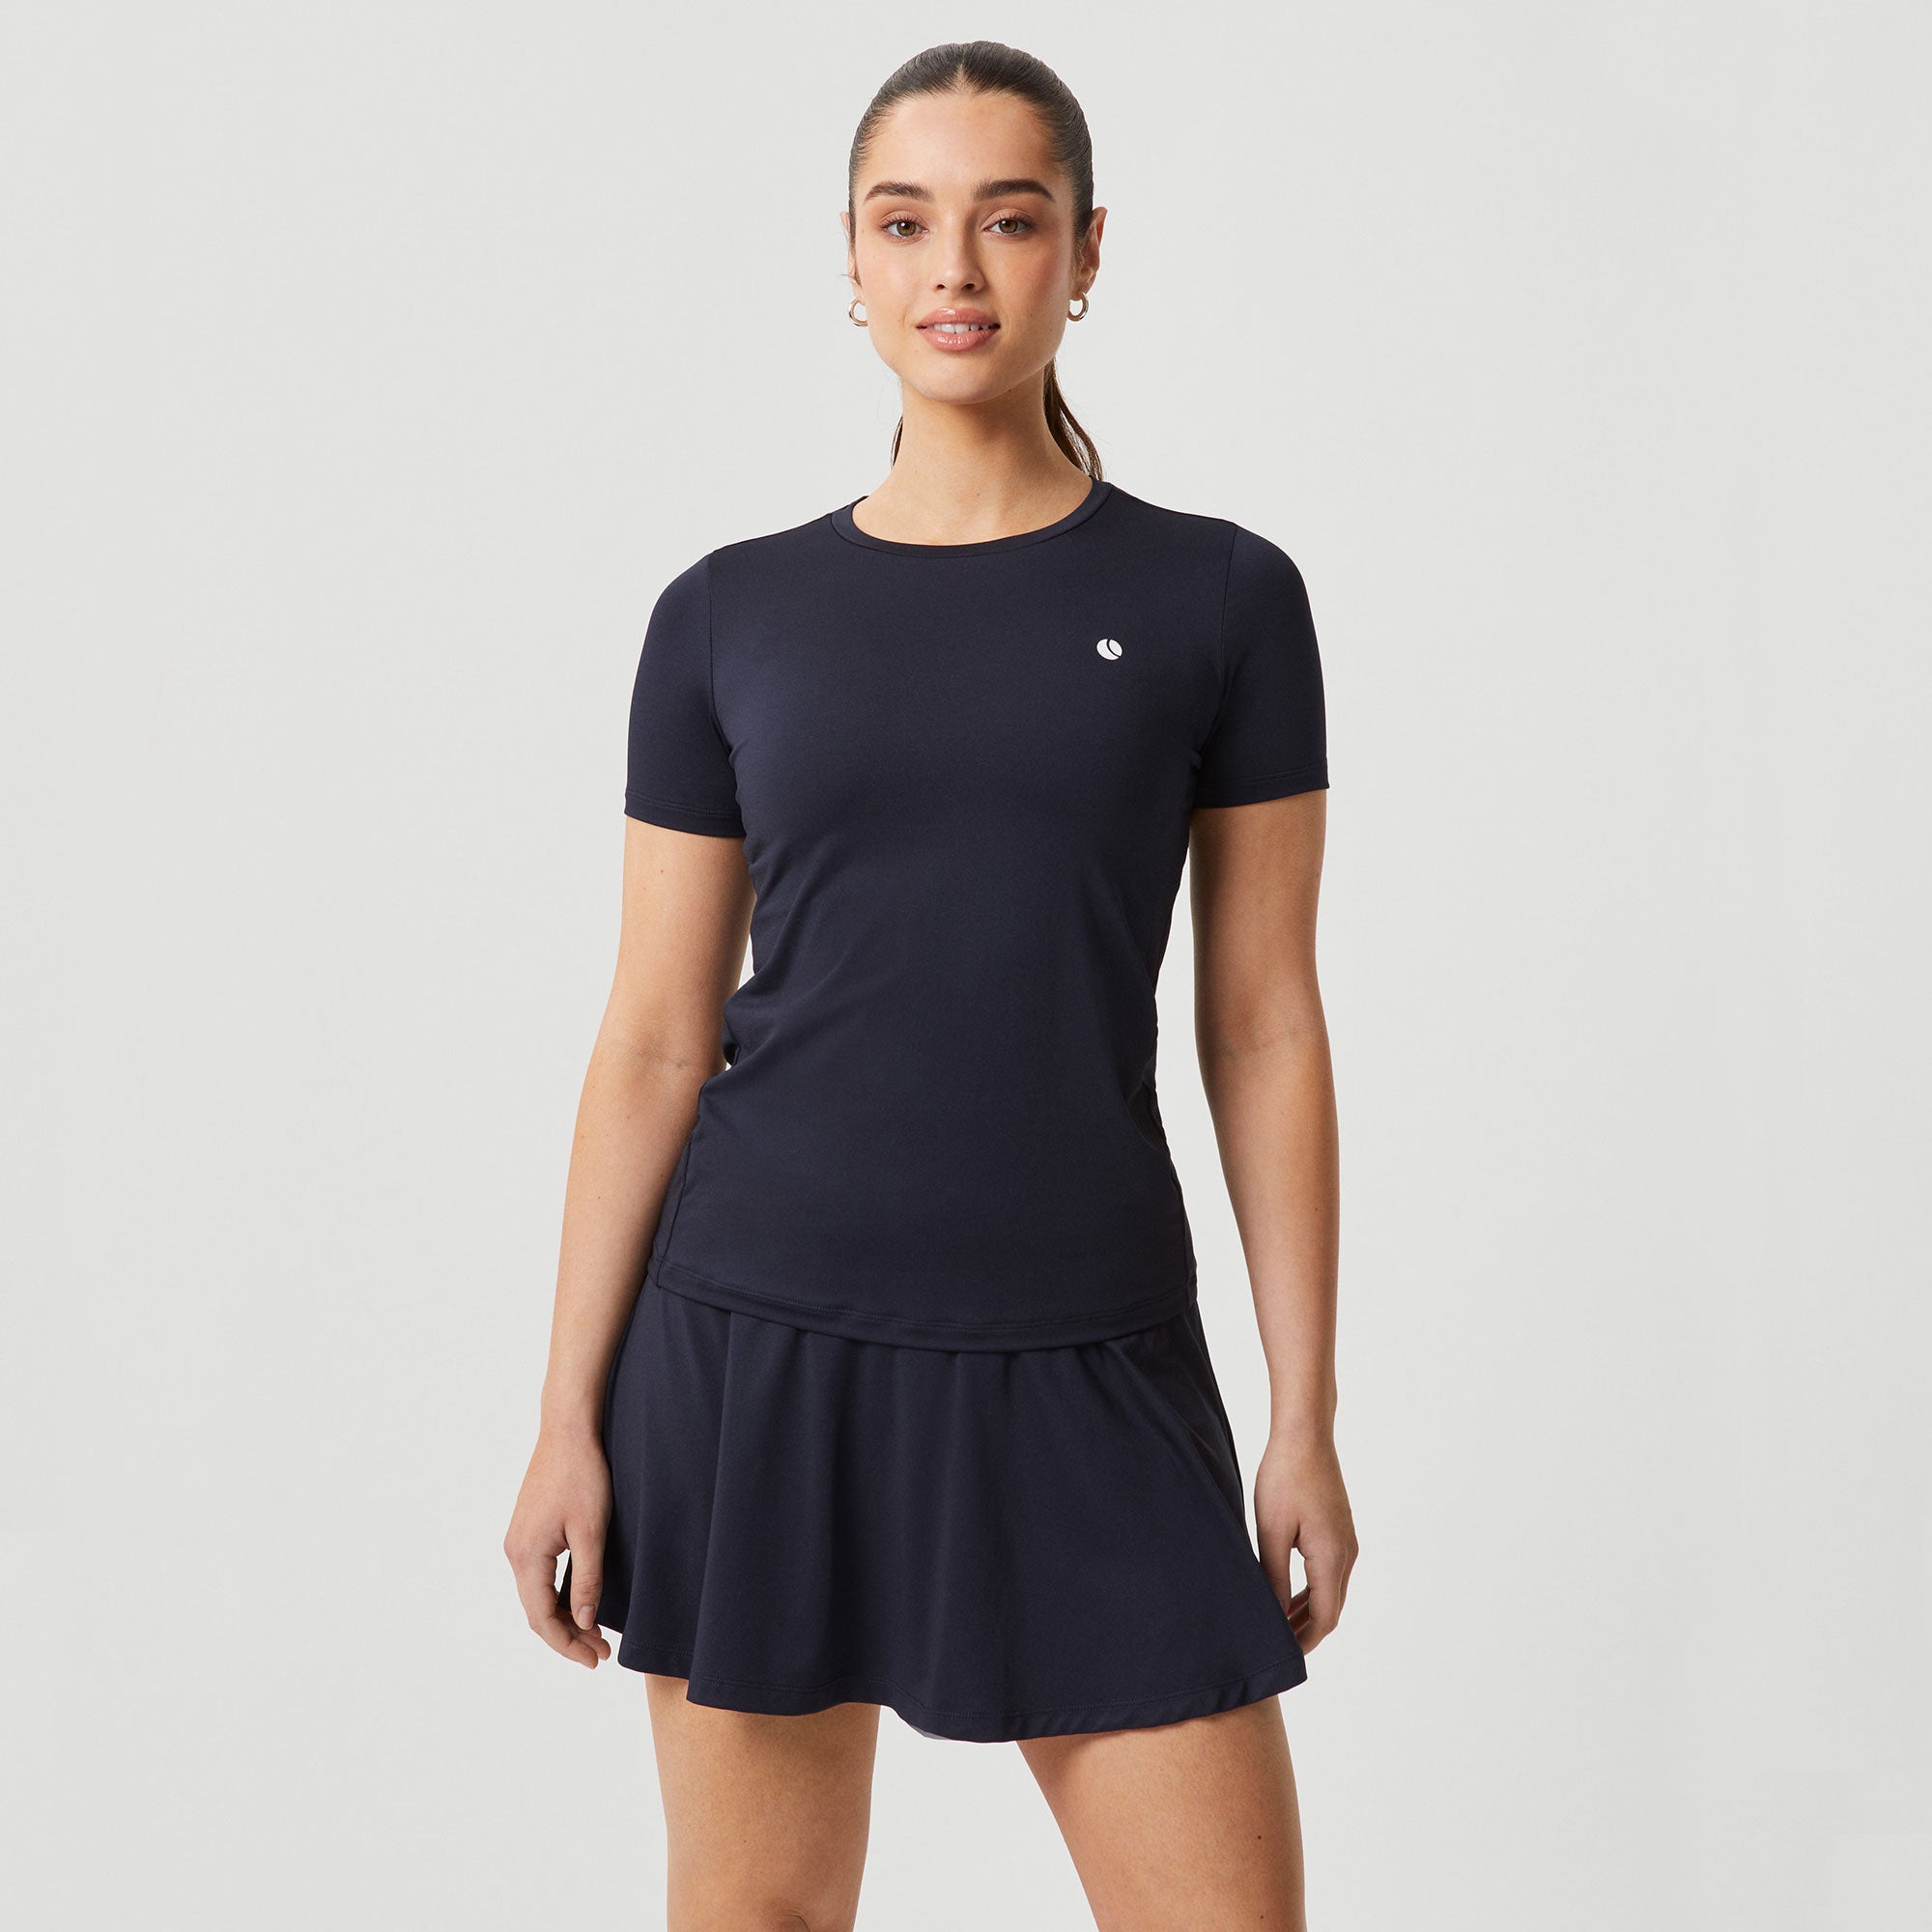 Björn Borg Ace Women's Slim Tennis Shirt - Dark Blue (1)